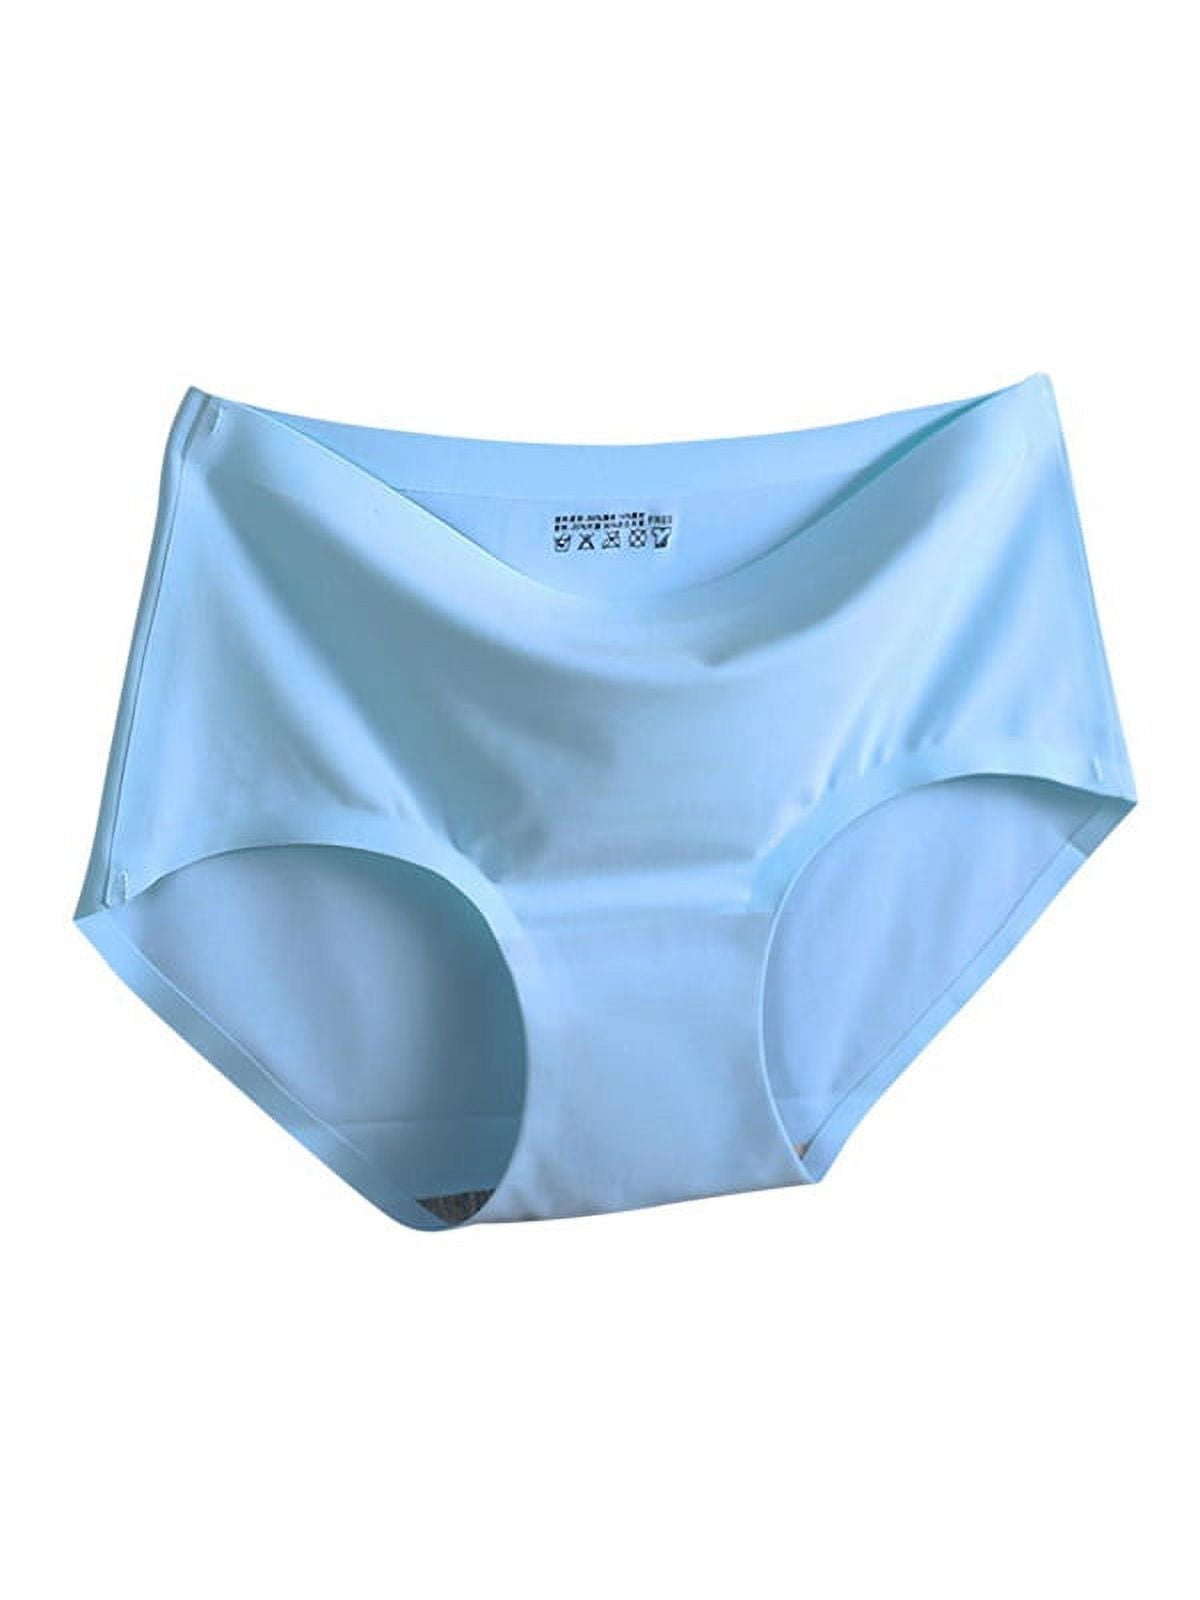 VDOGRIR Women's Ice Silk Panties Seamless Underwear Letters Sports